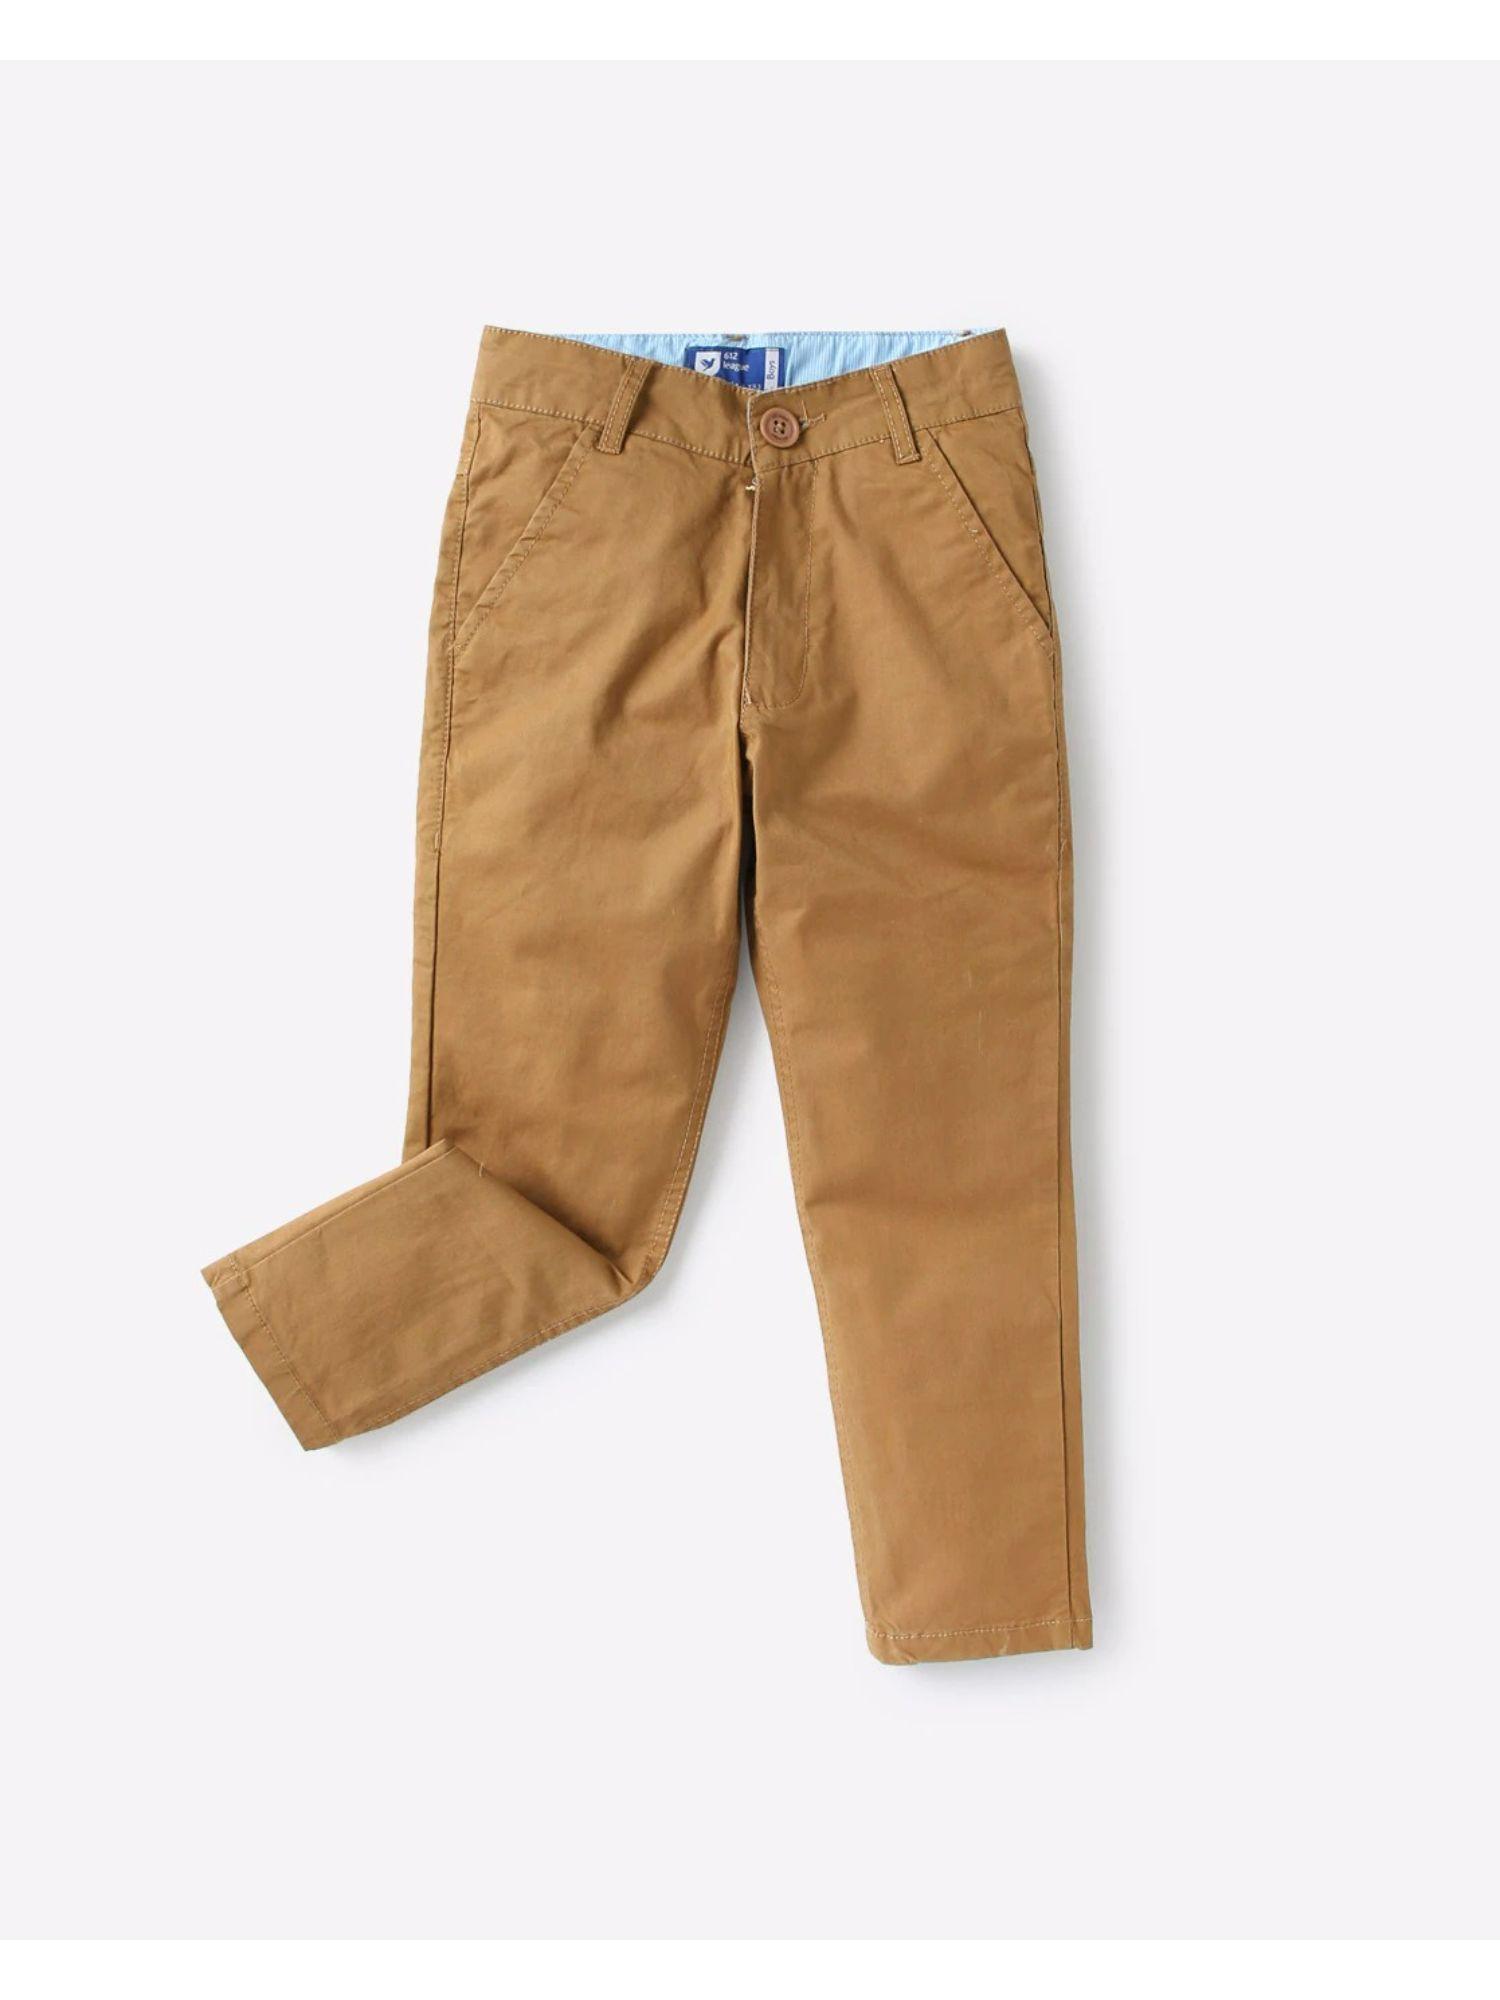 boy's pants in dark khakhi color